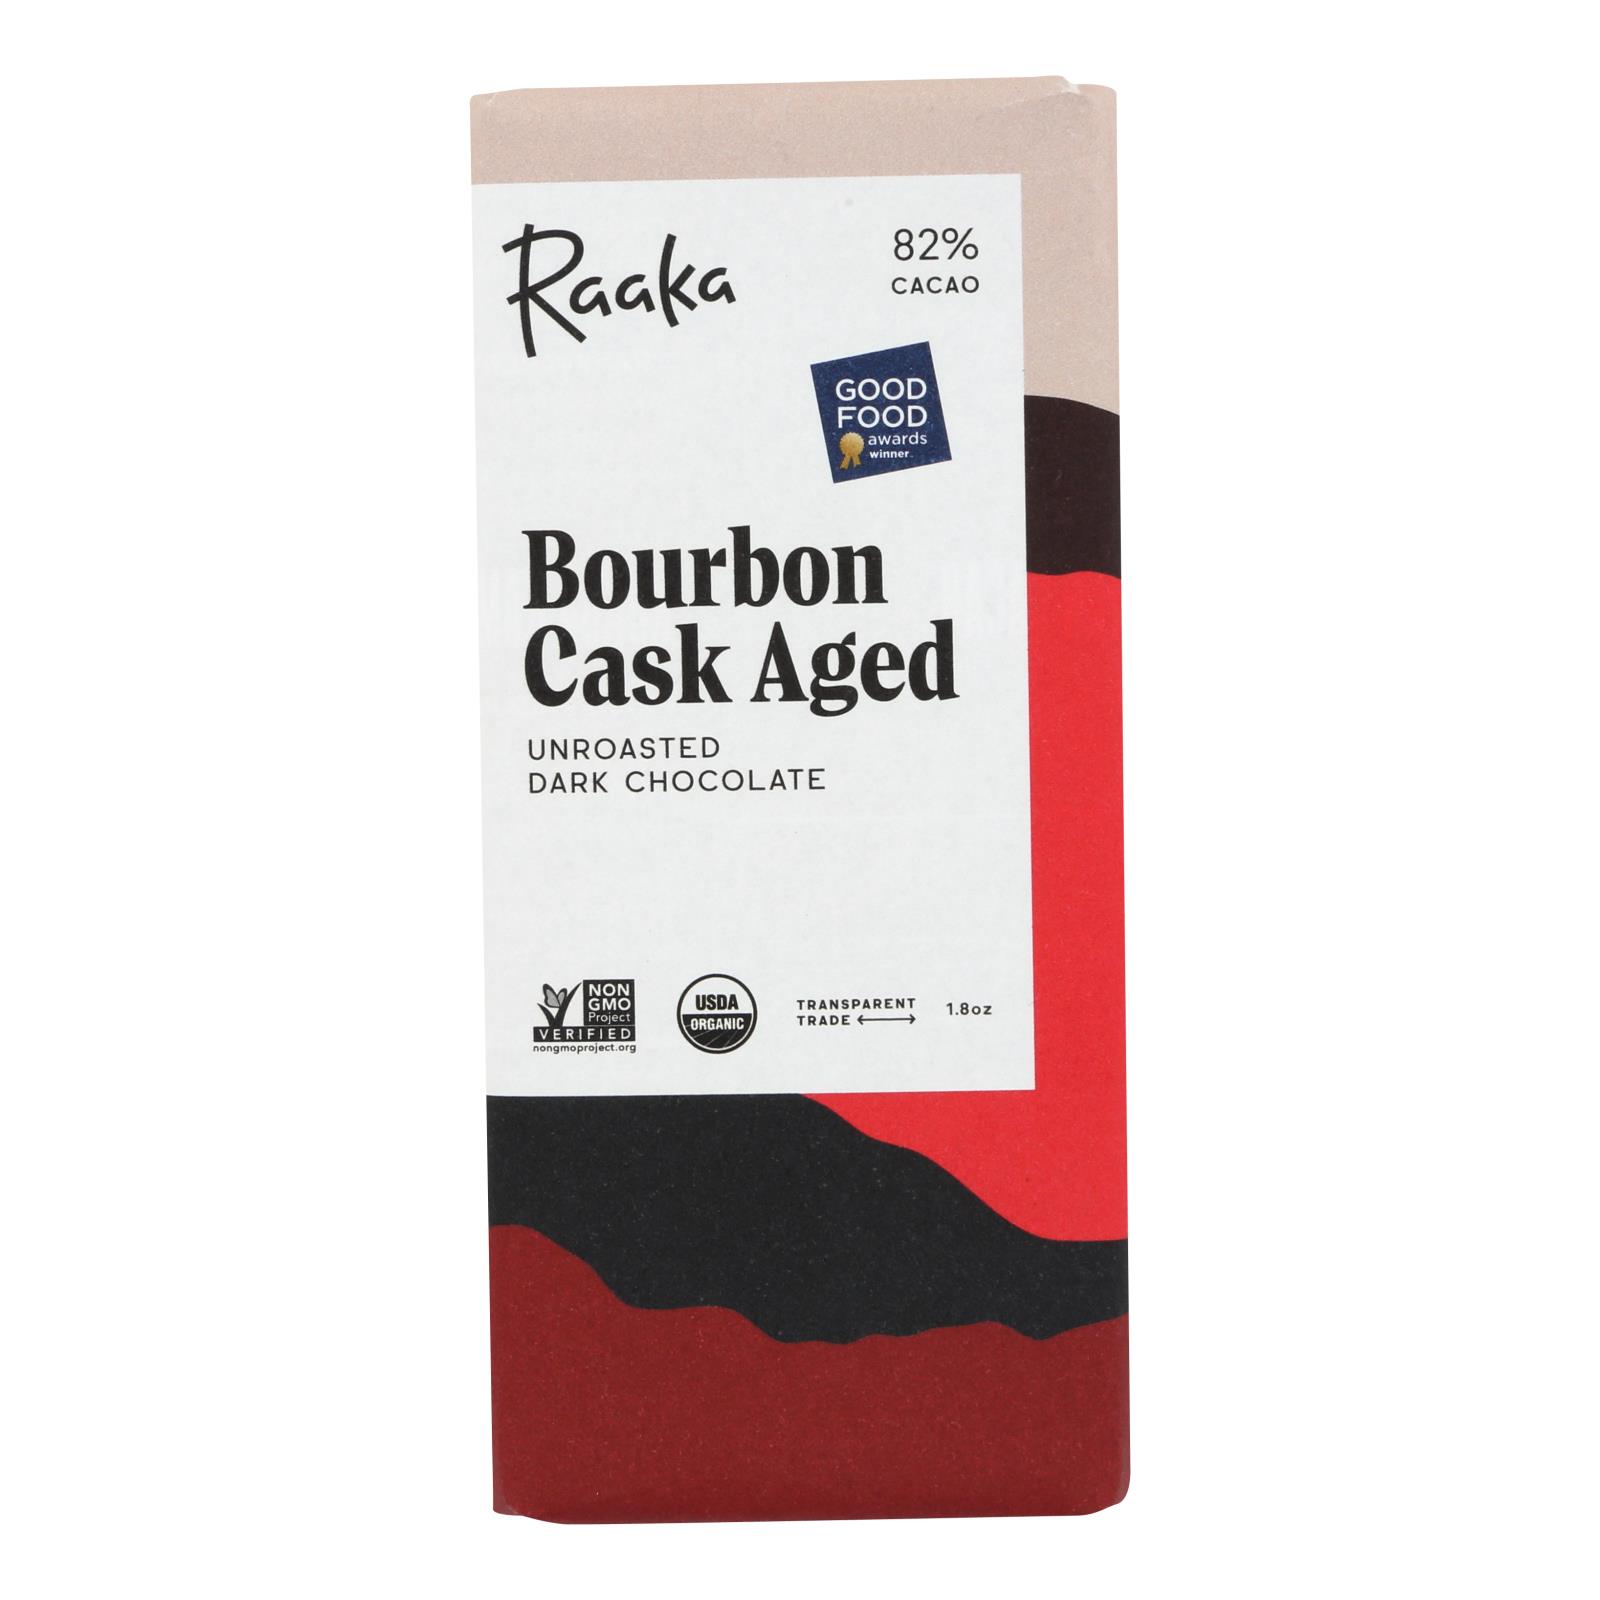 Raaka Virgin Chocolate Bourbon Cask Aged Chocolate Bar - 12개 묶음상품 - 1.8 OZ